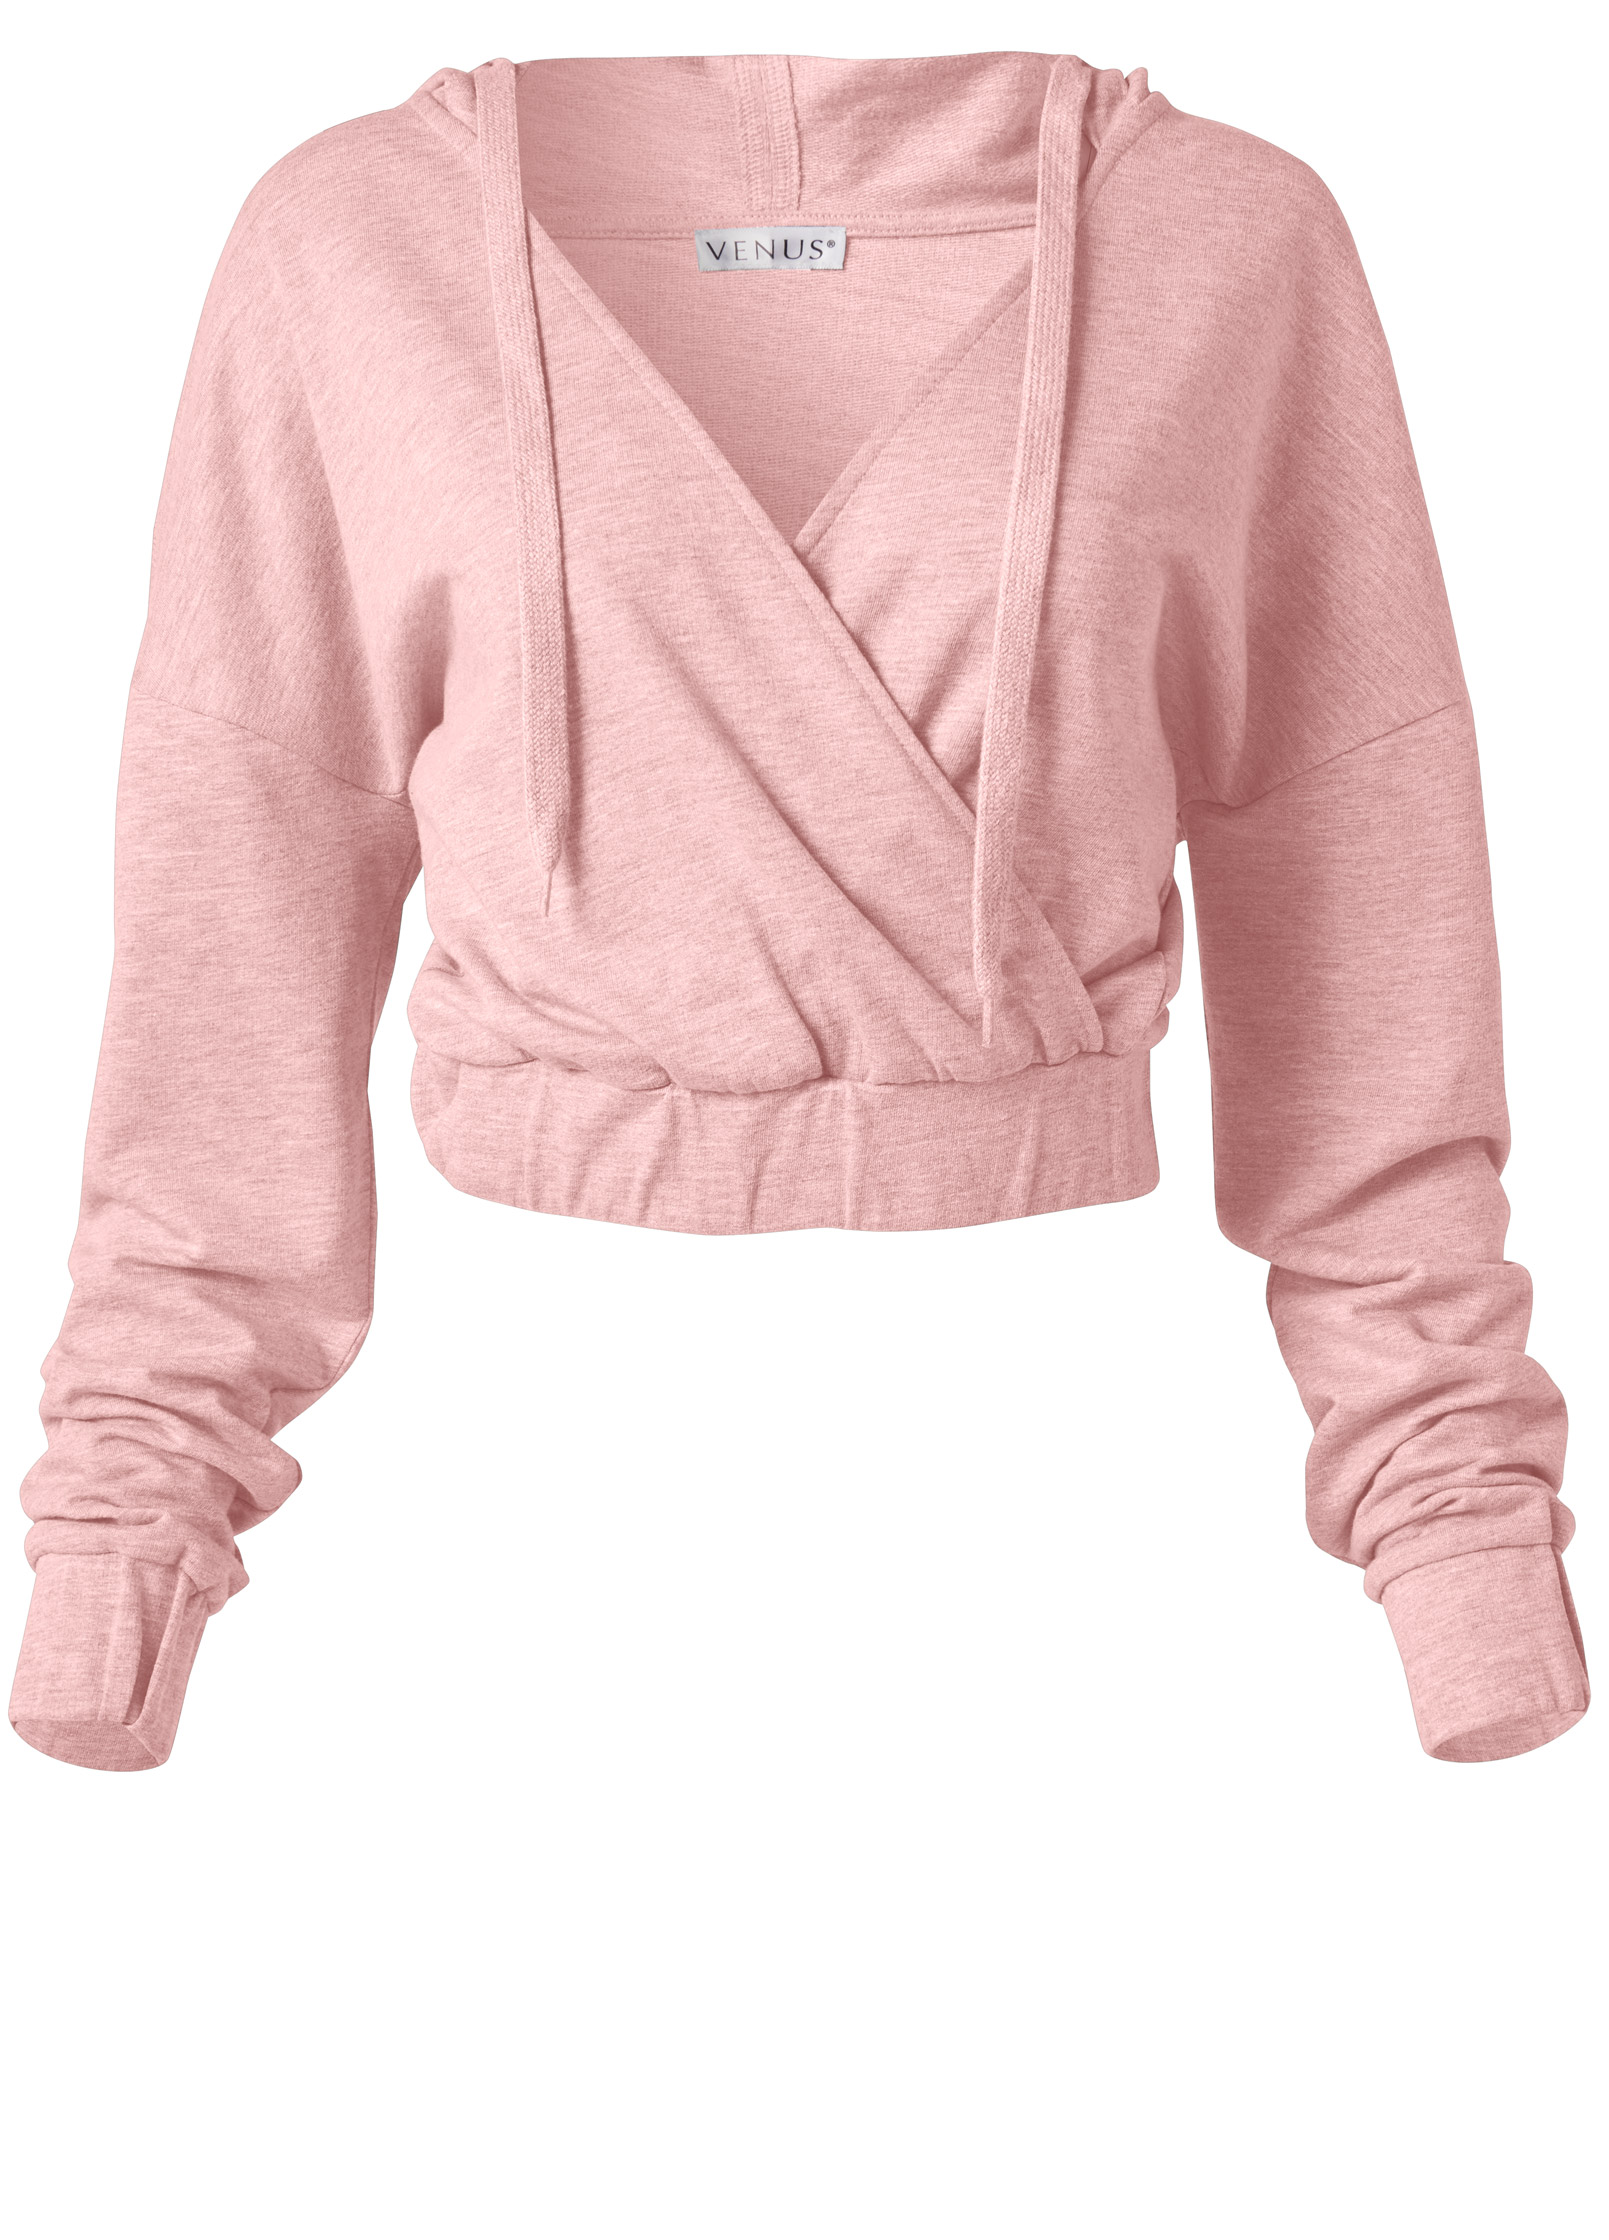 Surplice Pullover Sweatshirt in Heathered Pink | VENUS